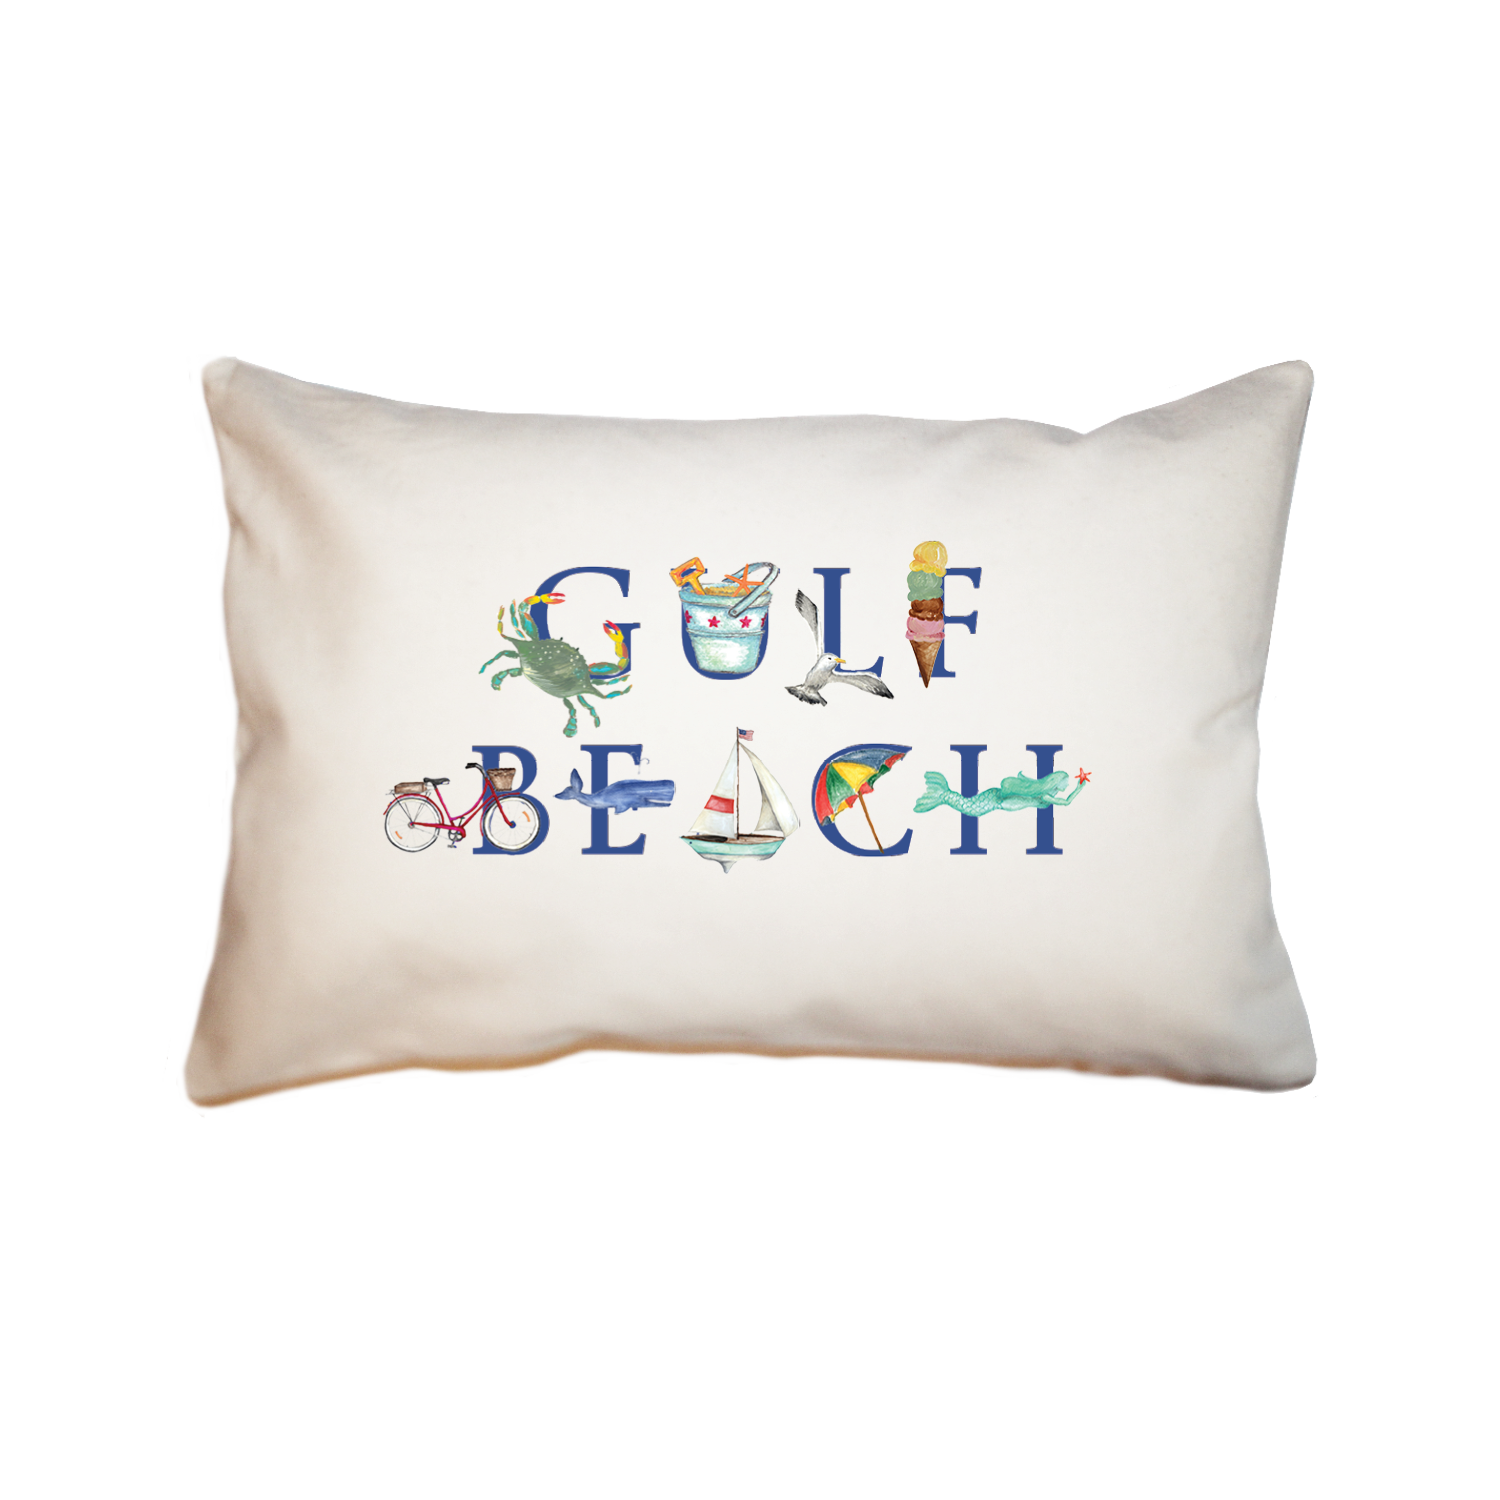 gulf beach large rectangle pillow